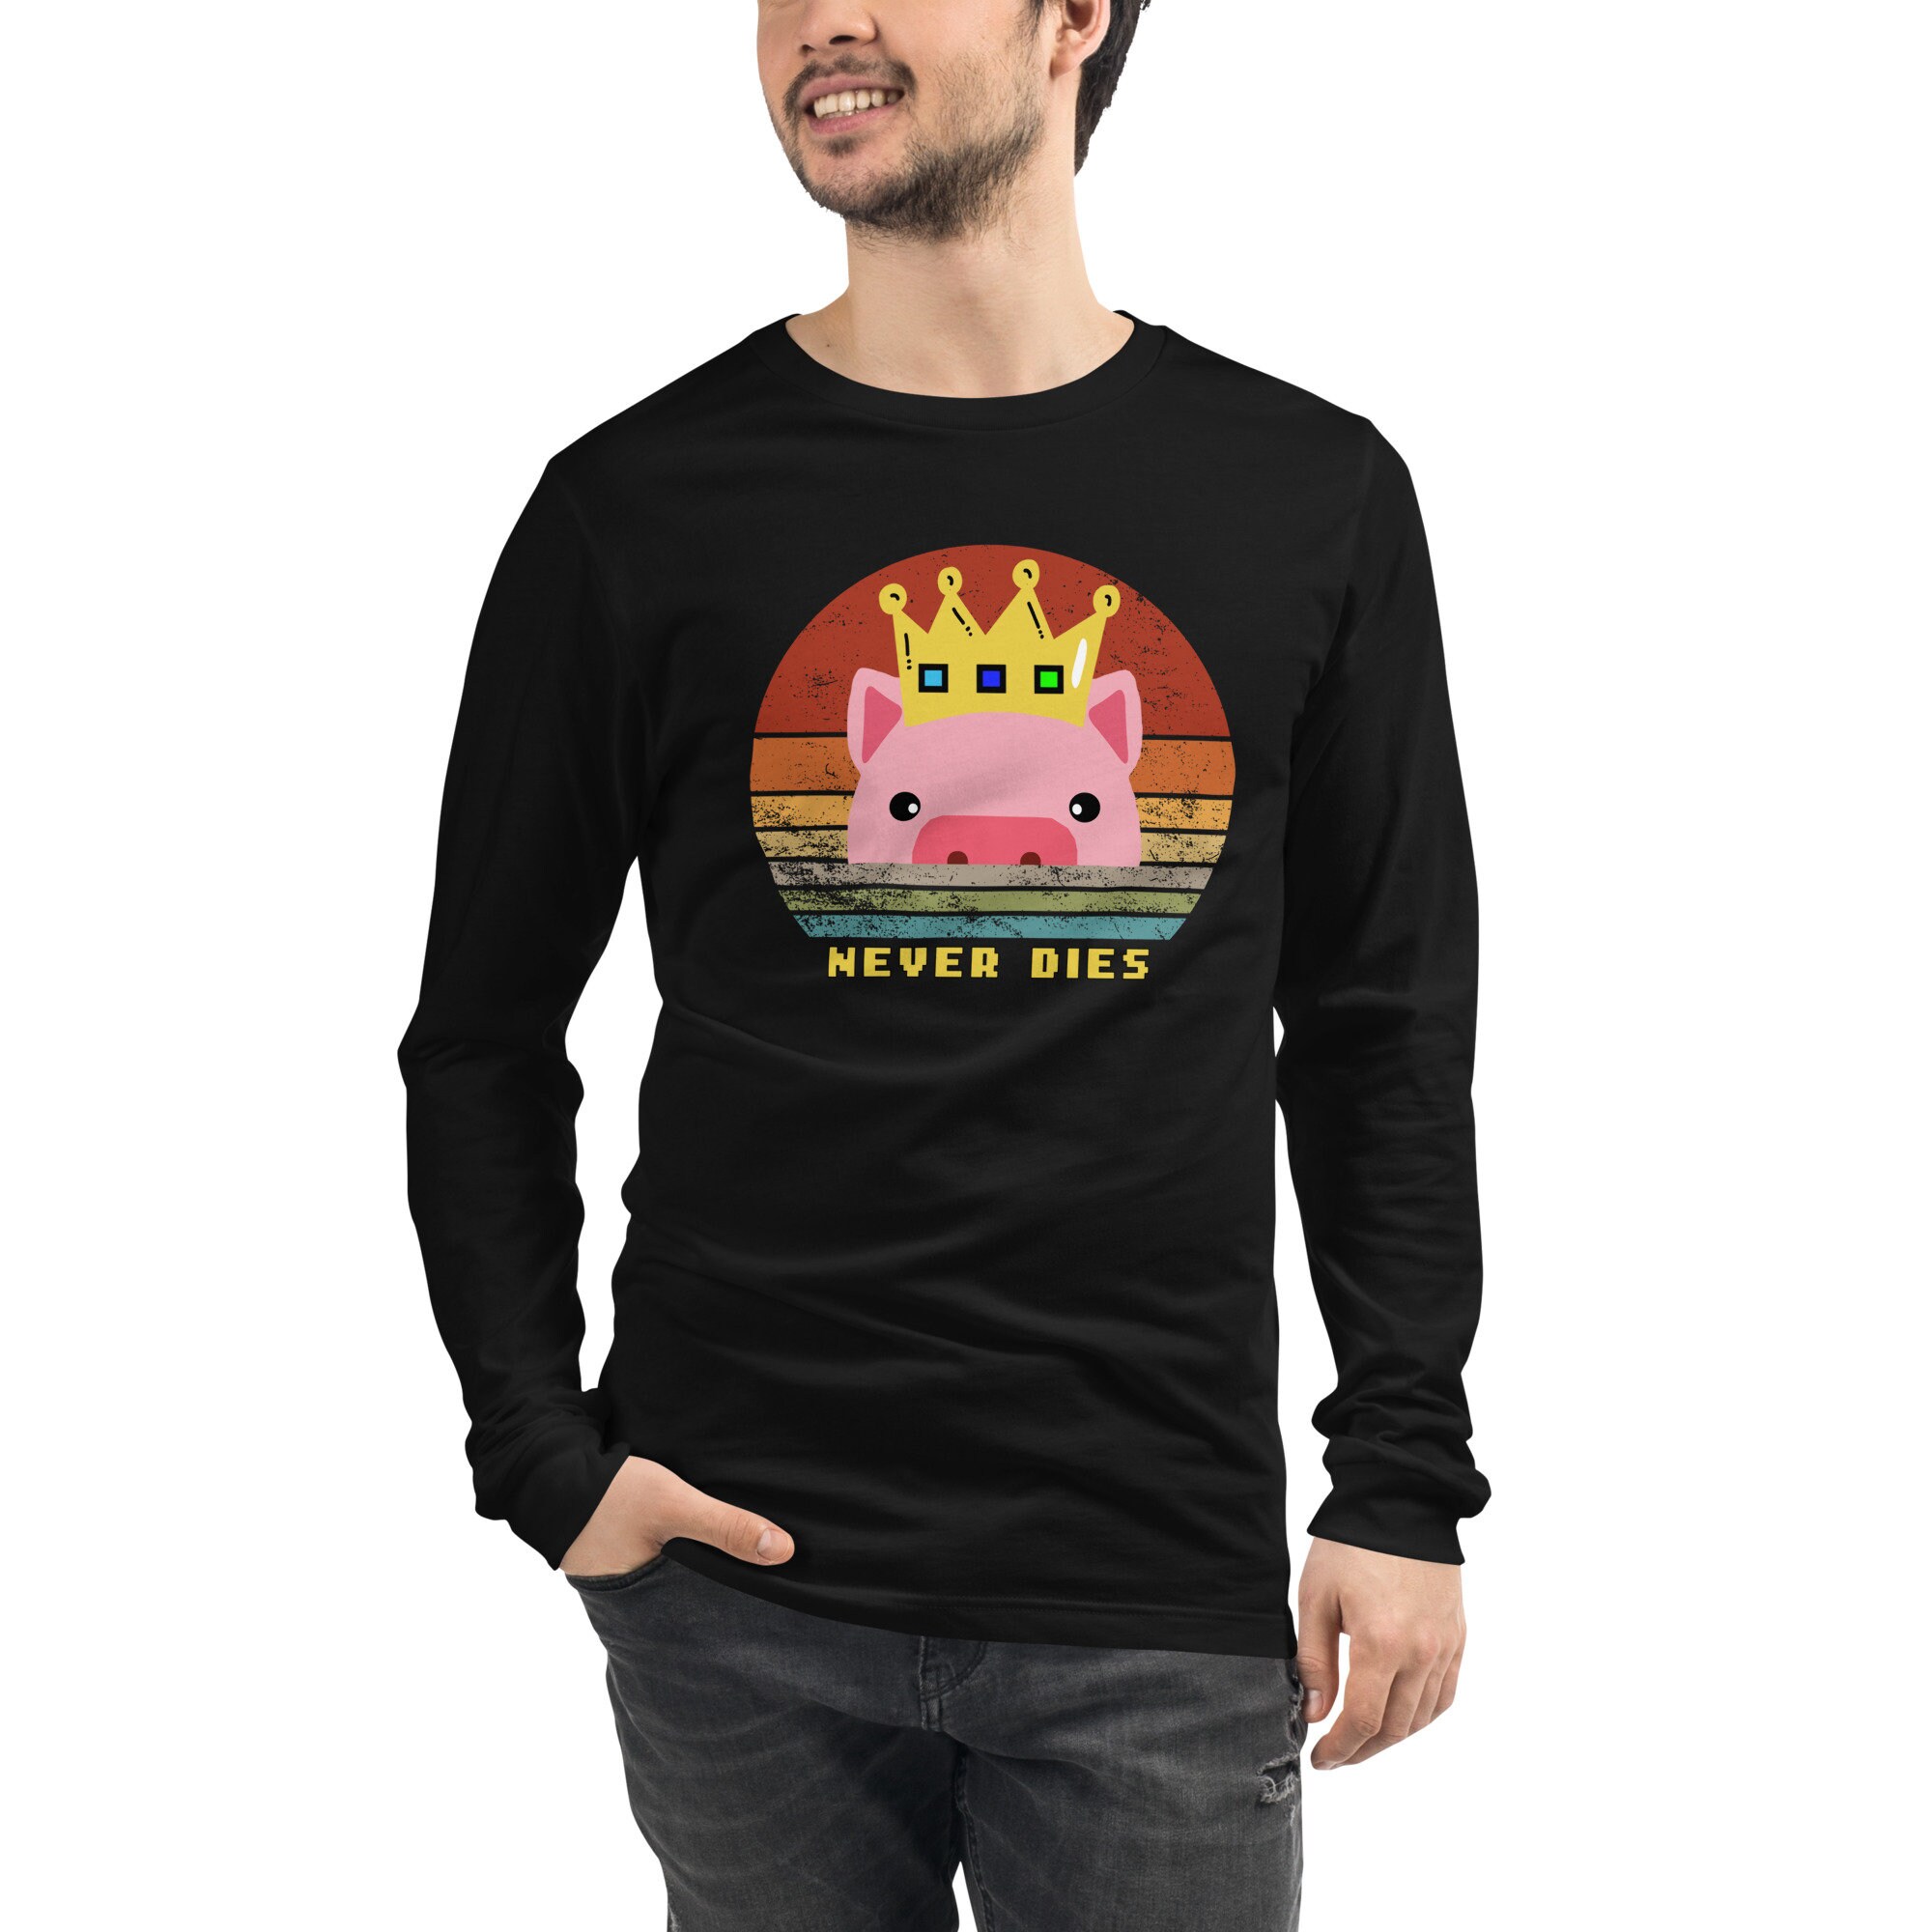 Technoblade Never Dies Good Game Hoodie Cosplay Long Sleeve Casual Fashion  Sweatshirt